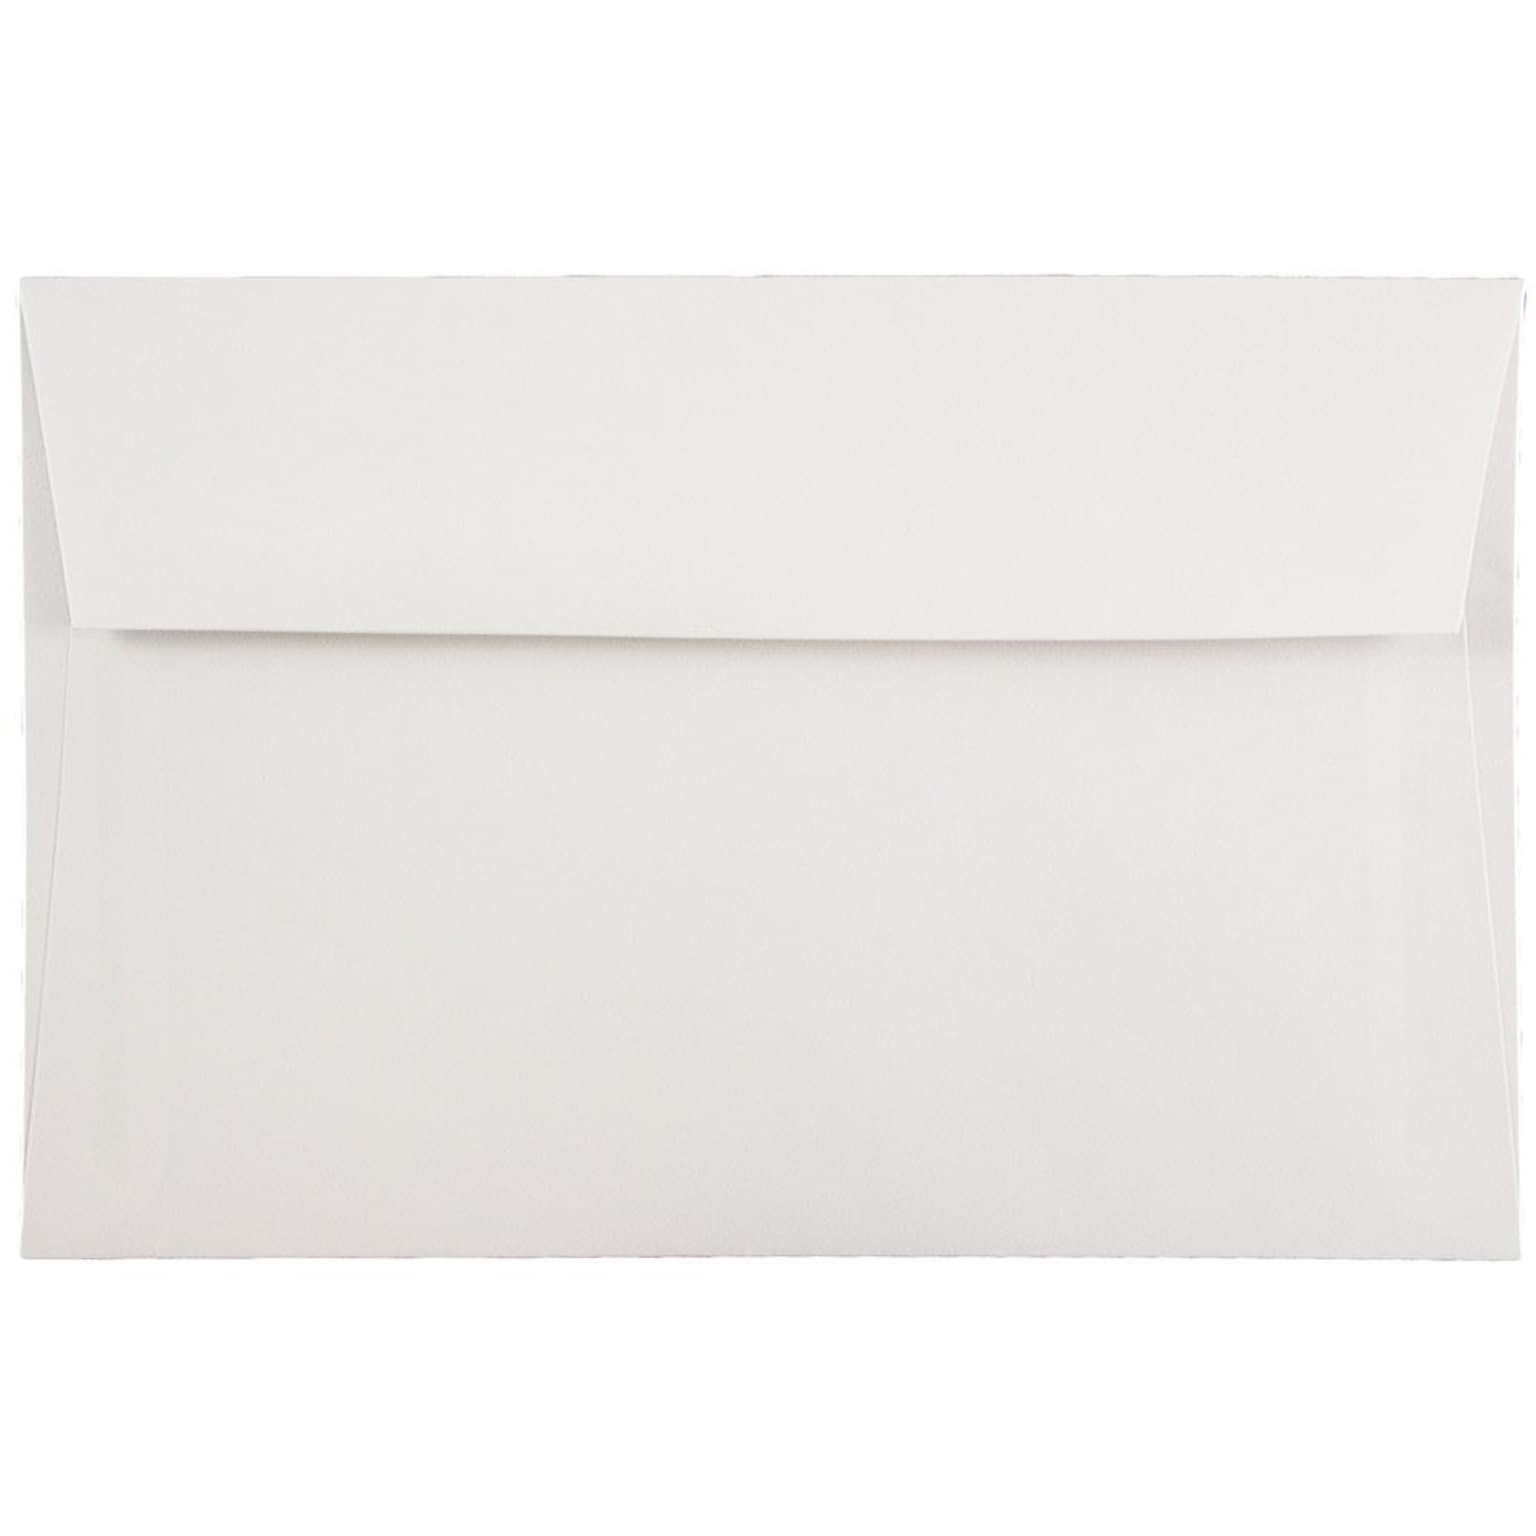 JAM Paper A9 Invitation Envelope, 5 3/4 x 8 3/4, White, 100/Pack (4023213C)